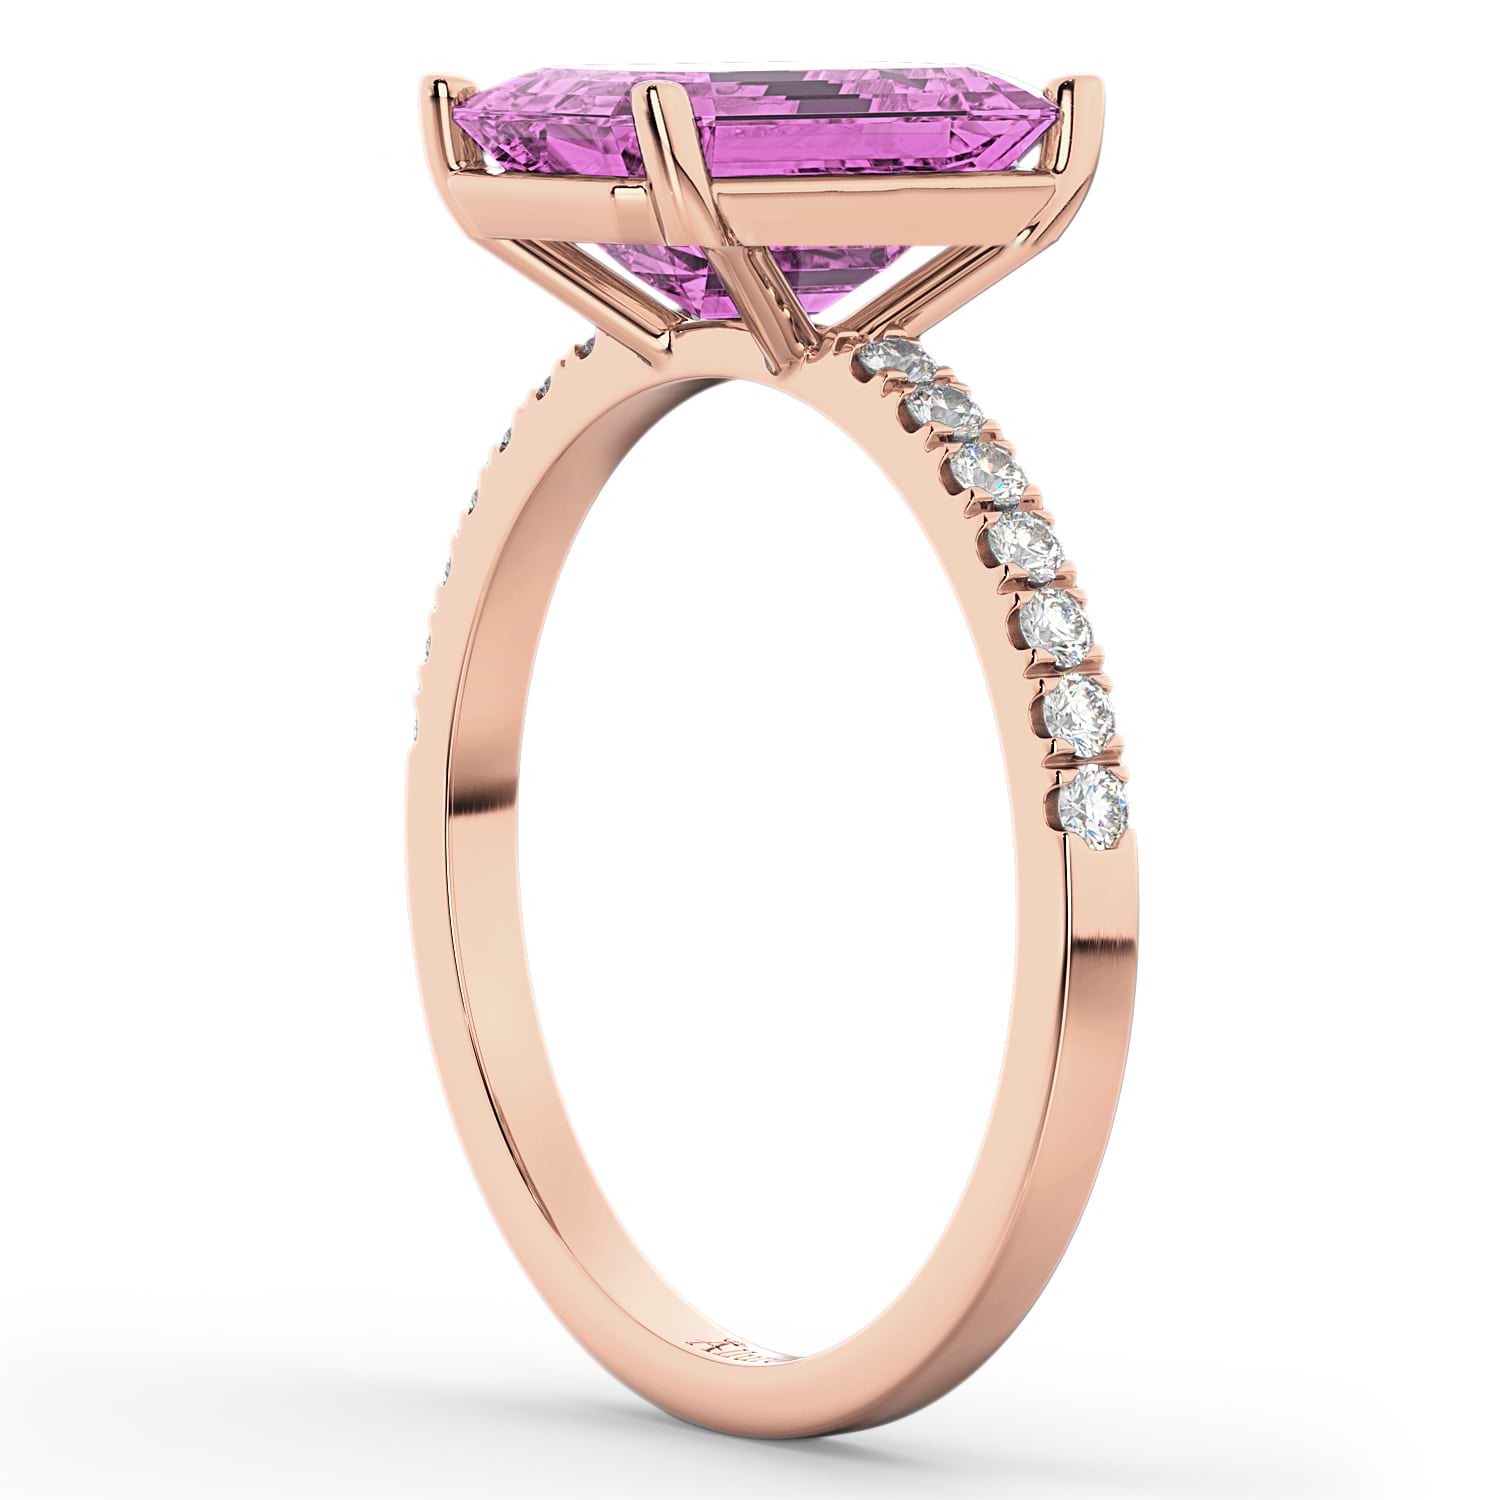 Emerald Cut Pink Sapphire Diamond Engagement Ring 18k Rose Gold (2.96ct)